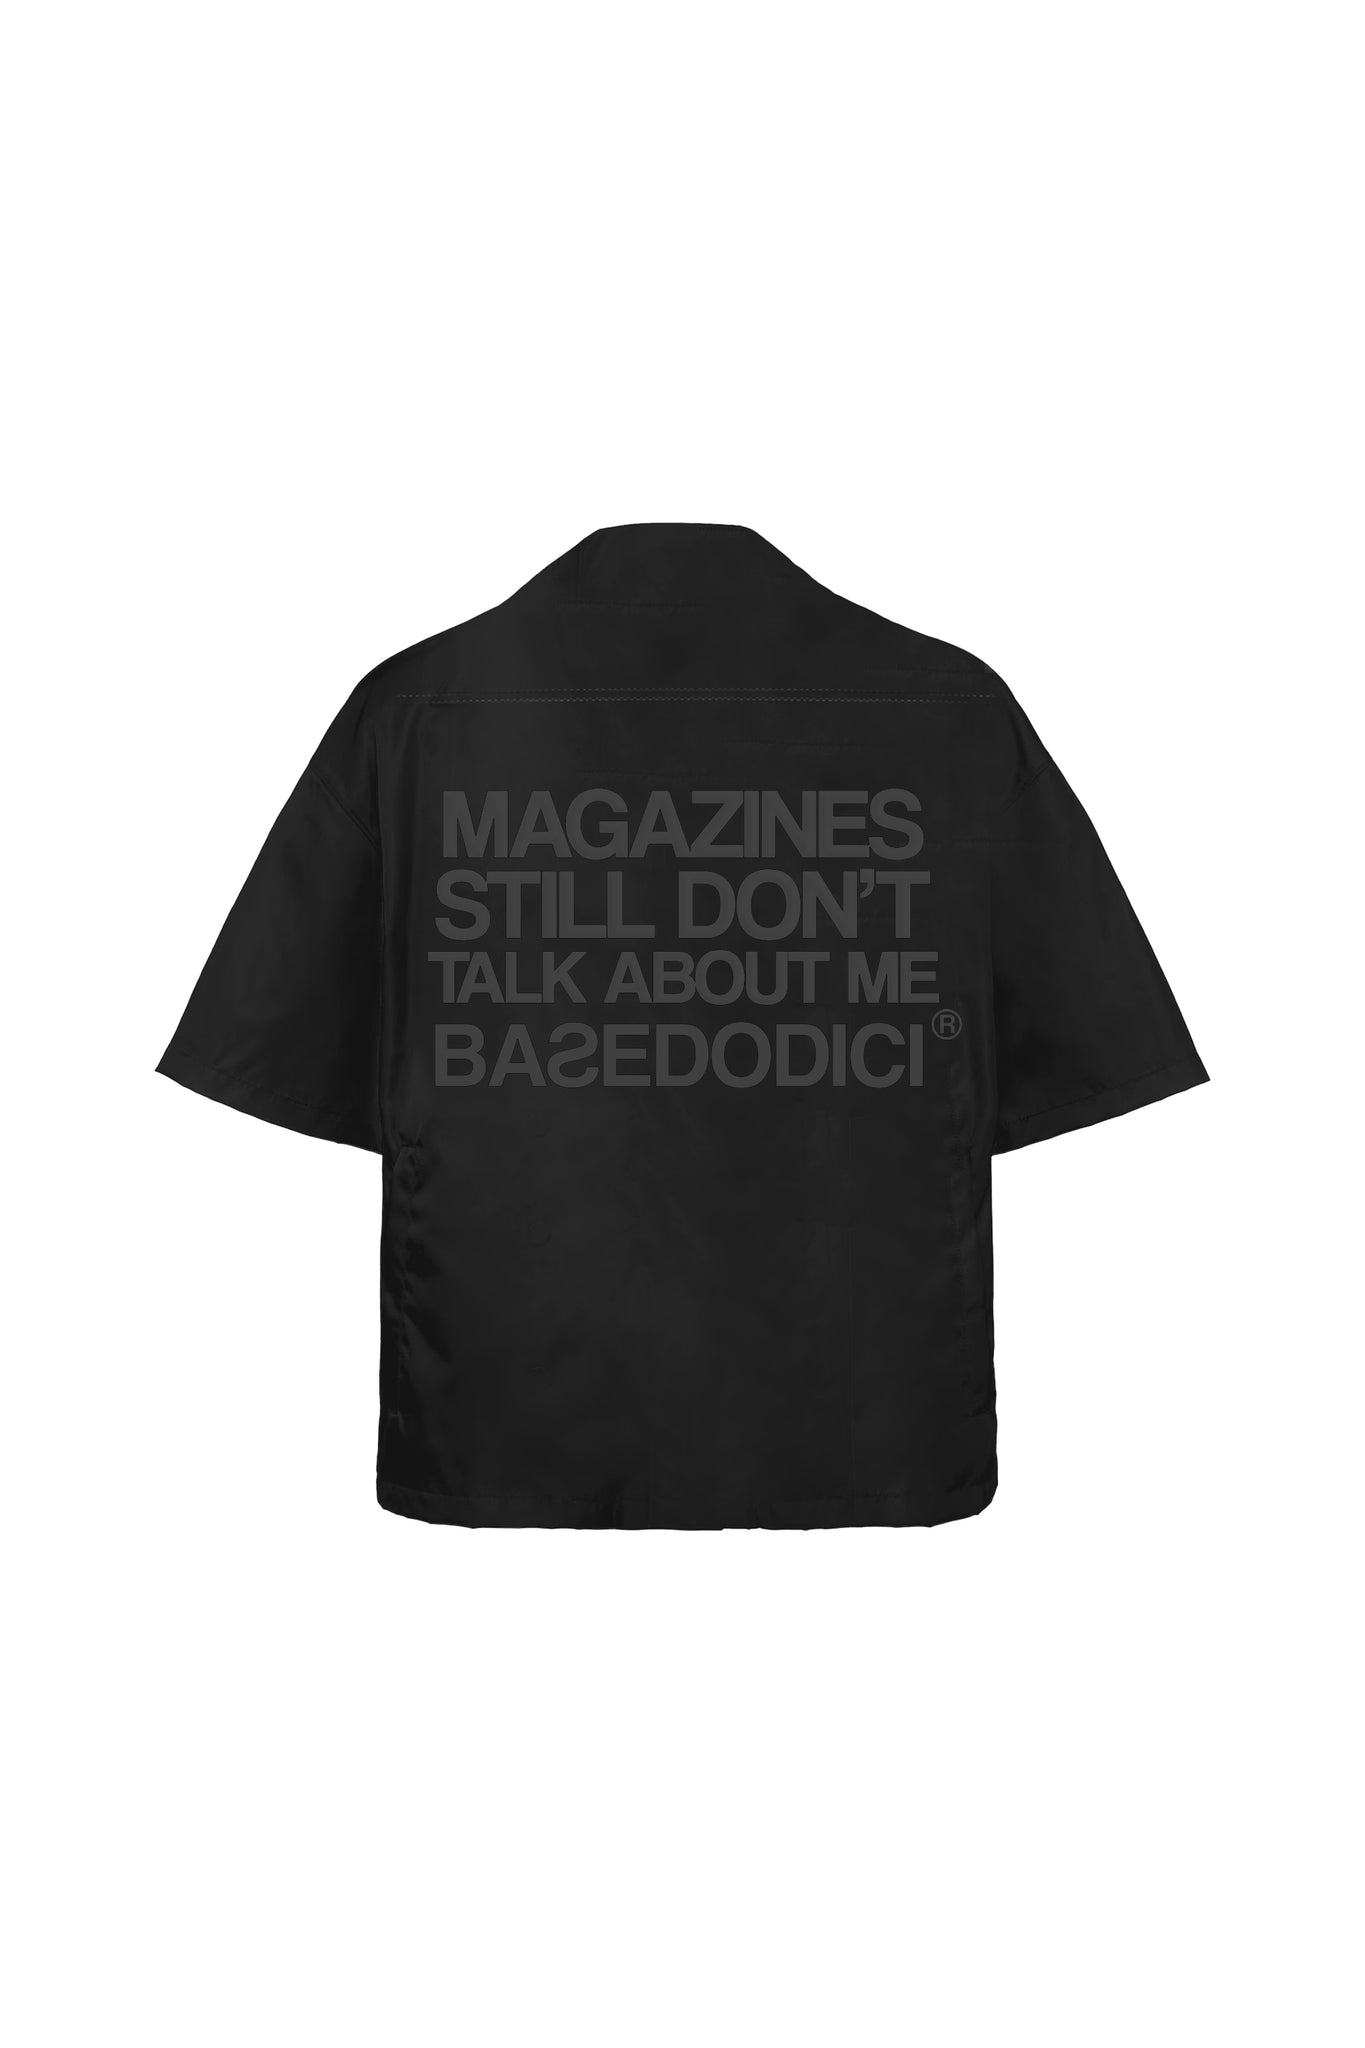 “FORSUMMER” Magazine Black Shirt